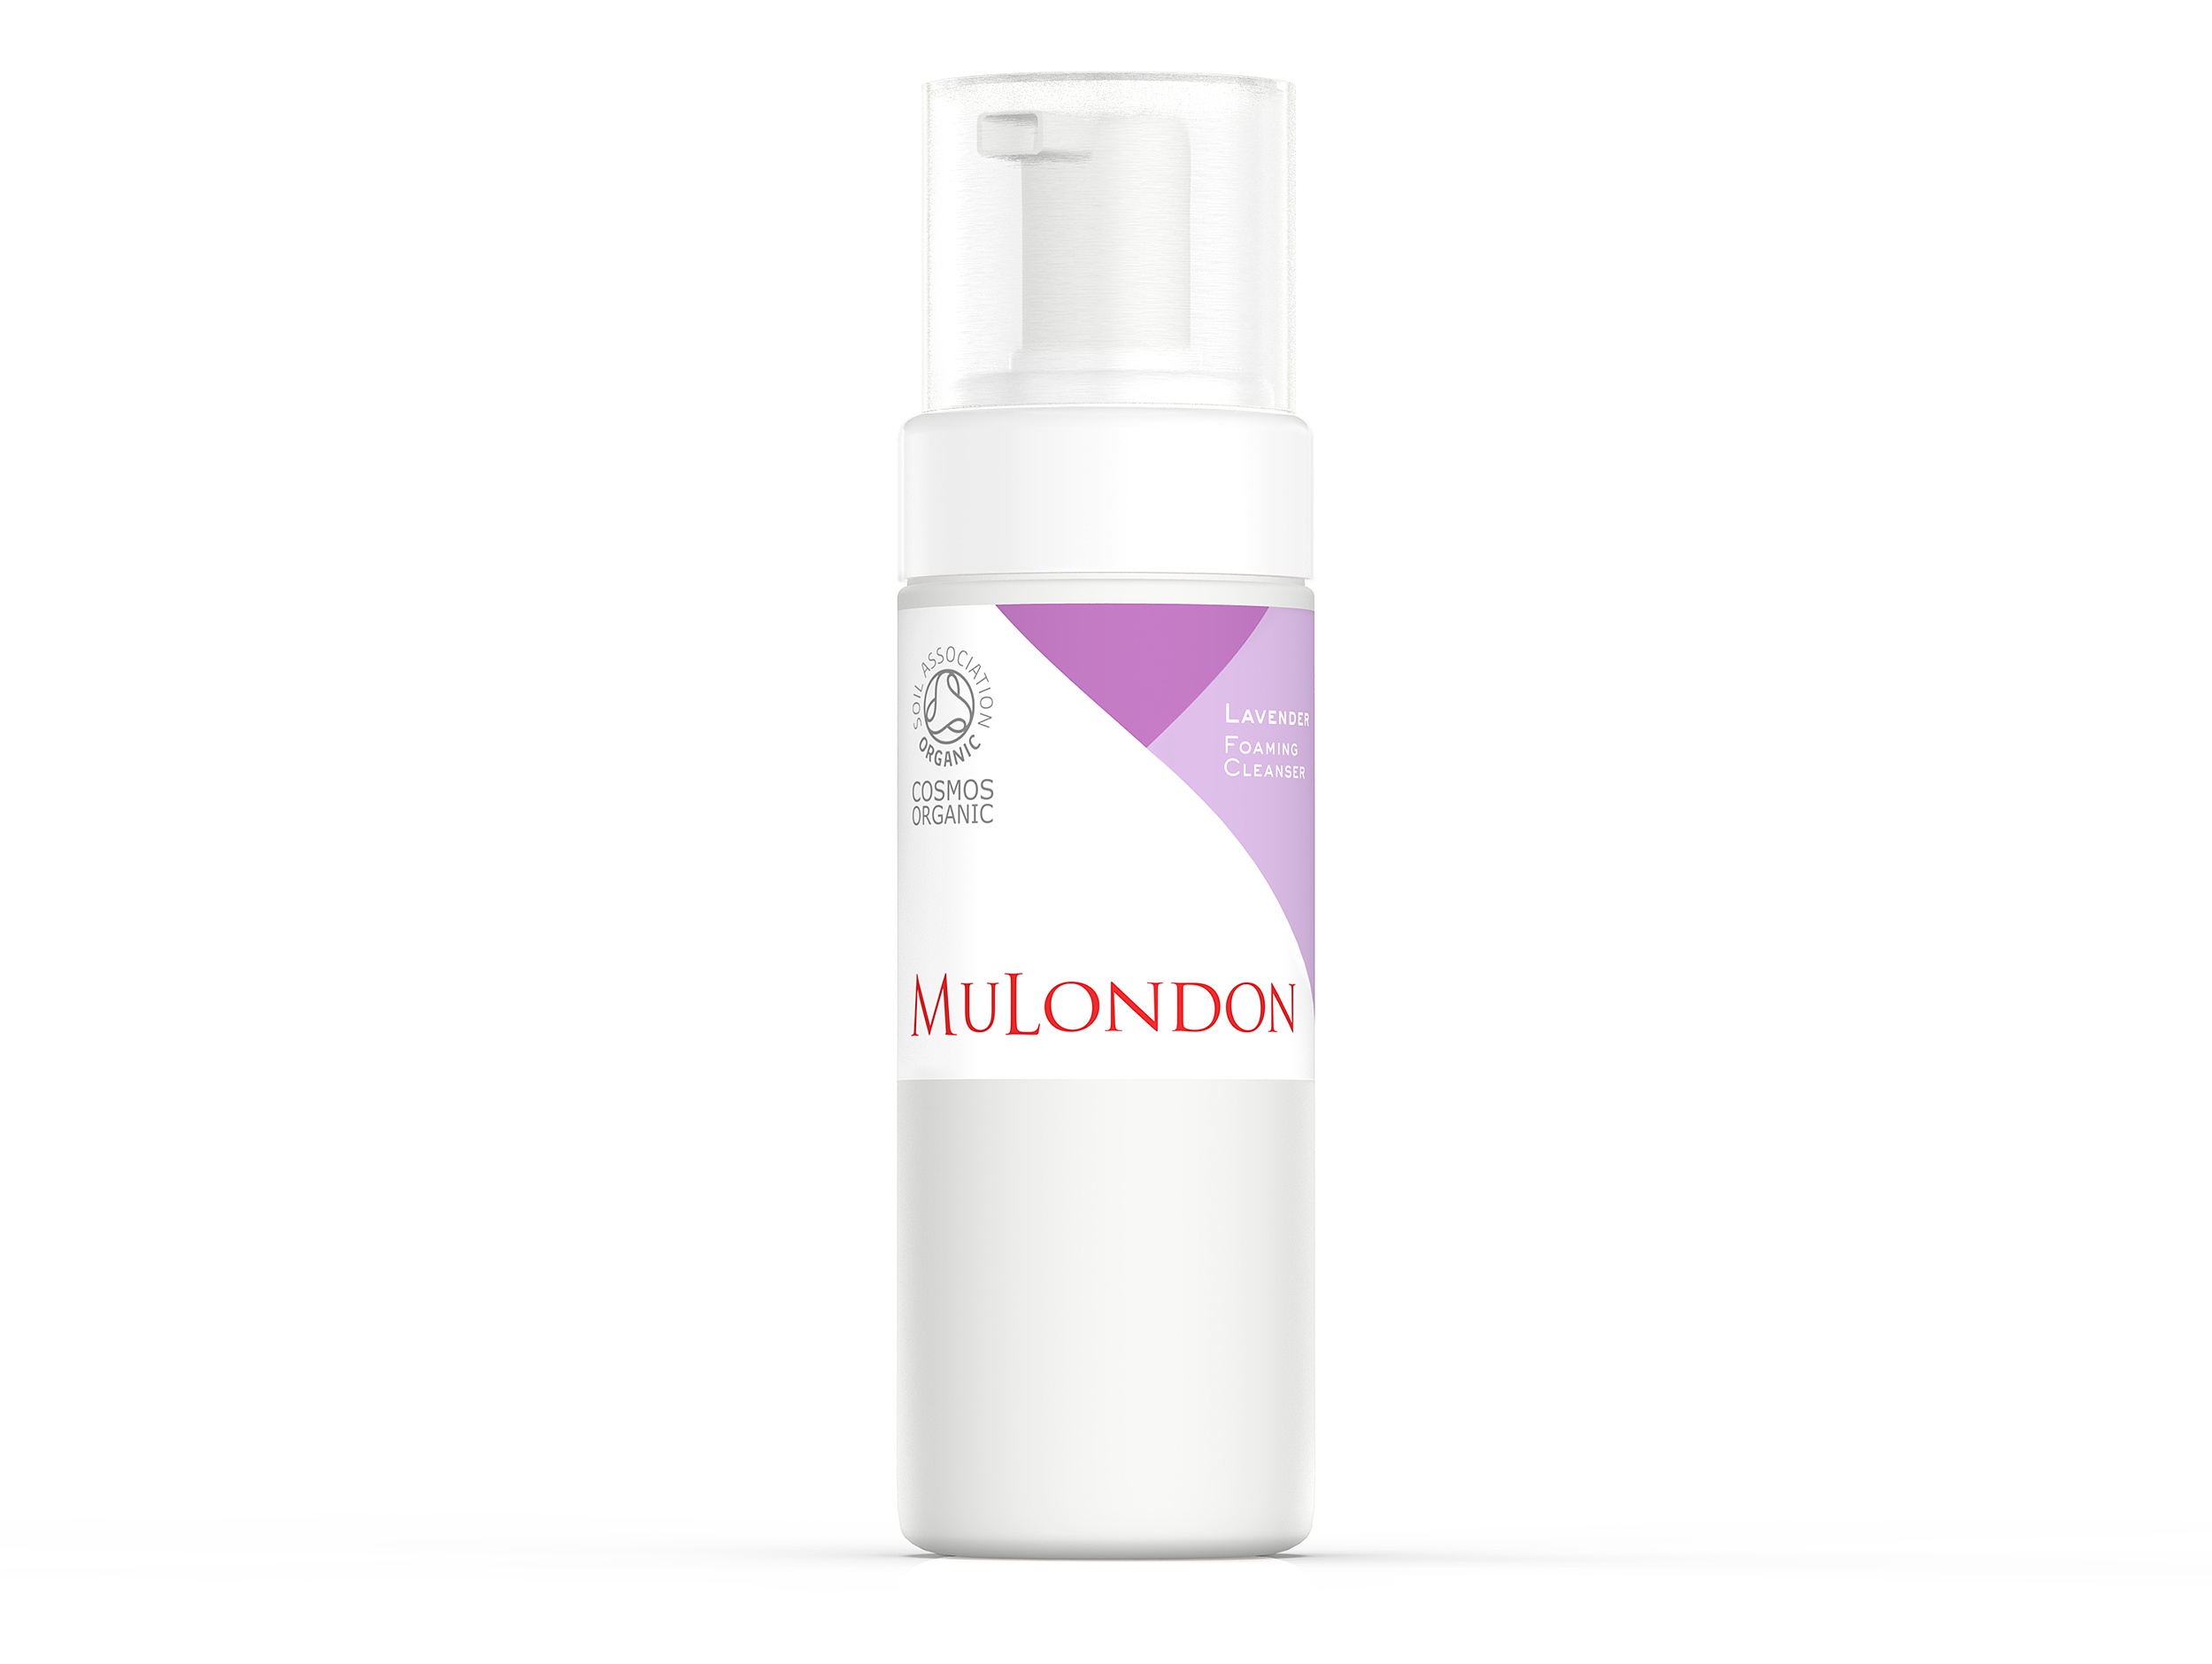 MuLondon Lavender Foaming Cleanser